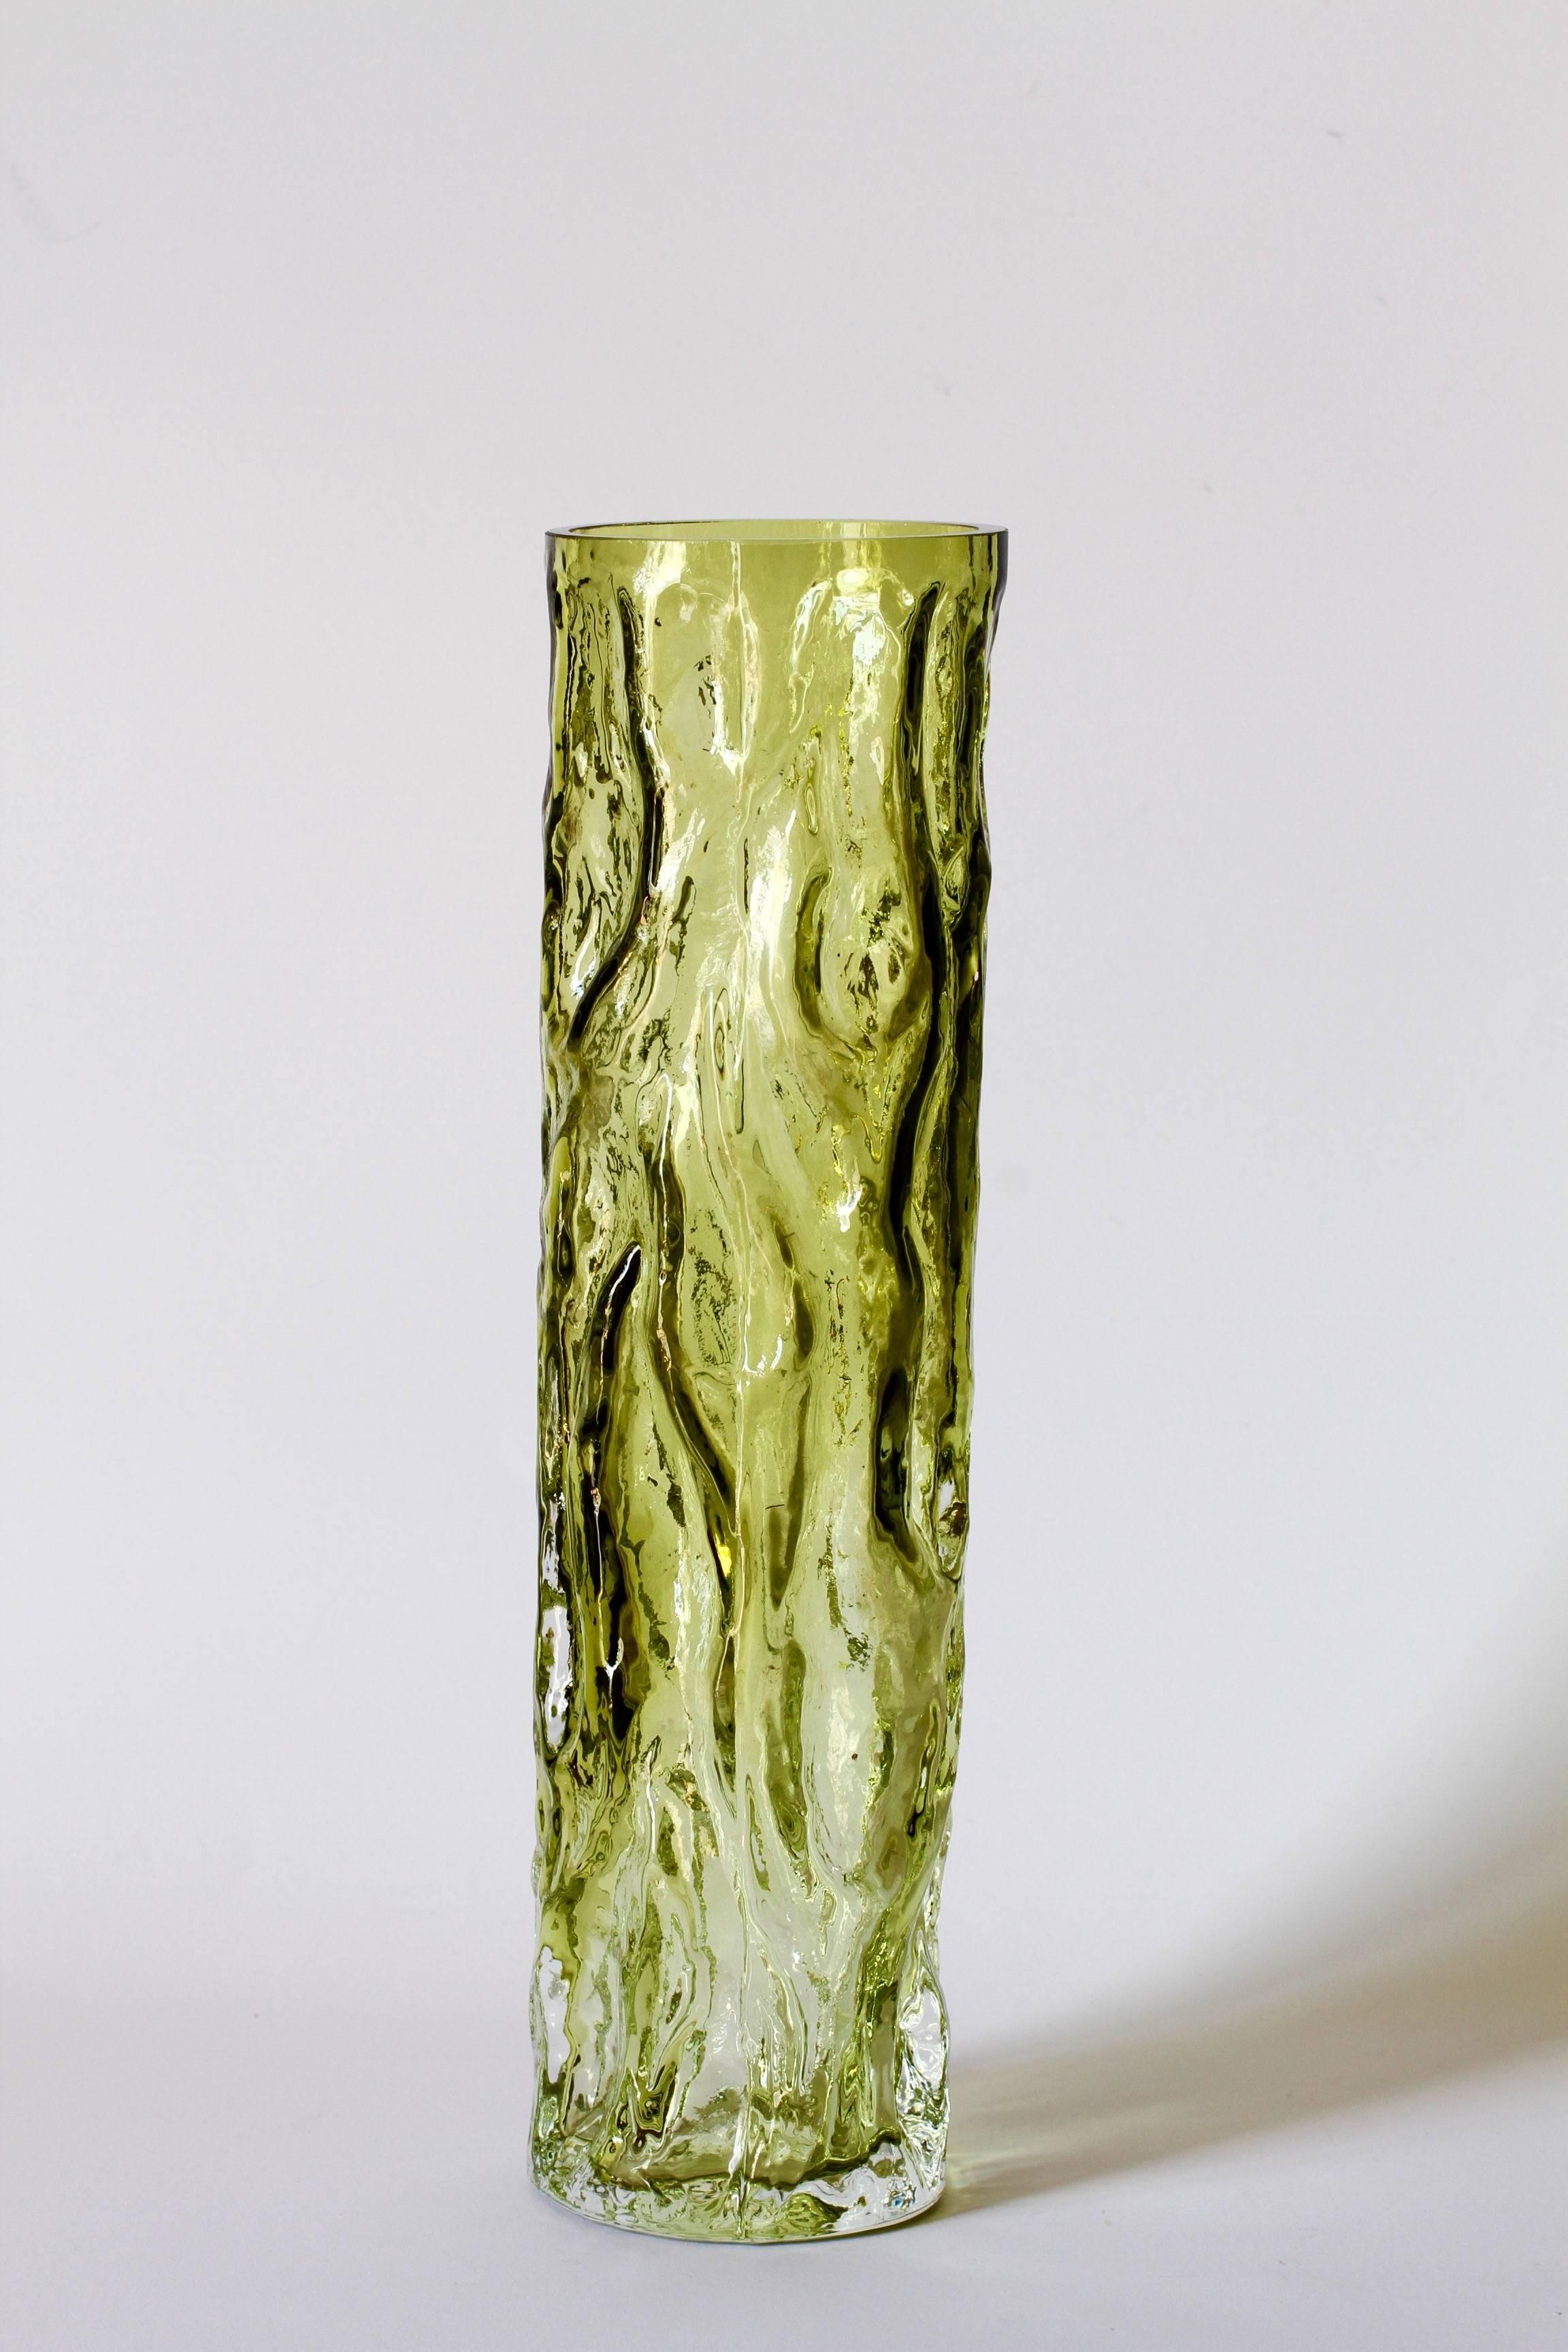 German Tall Vintage Vibrant Moss Green Glass Tree Bark Vase by Ingrid Glas, circa 1970s